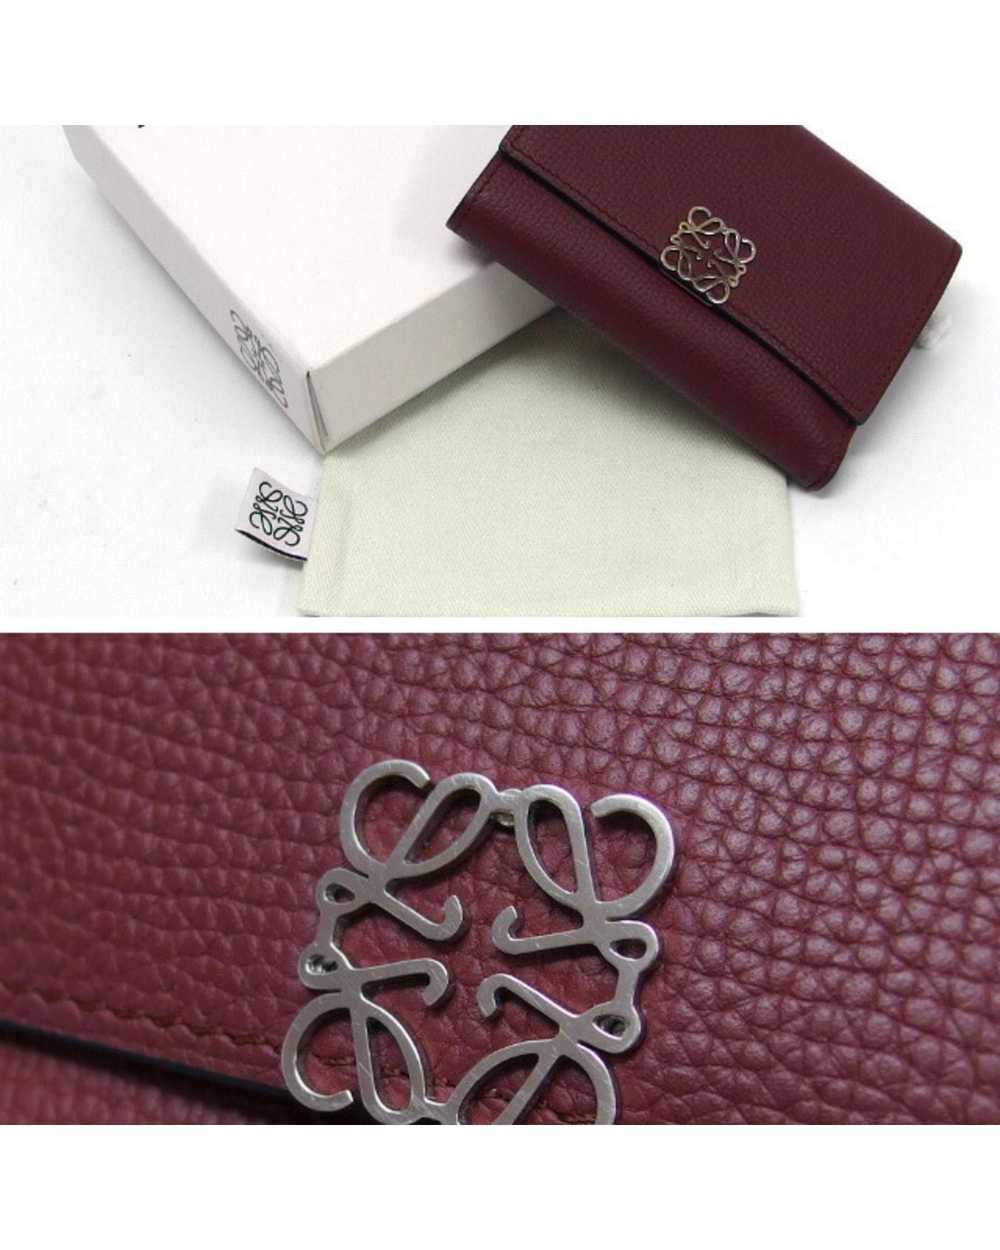 Loewe Leather Tri-Fold Wallet with Loewe Logo - image 4